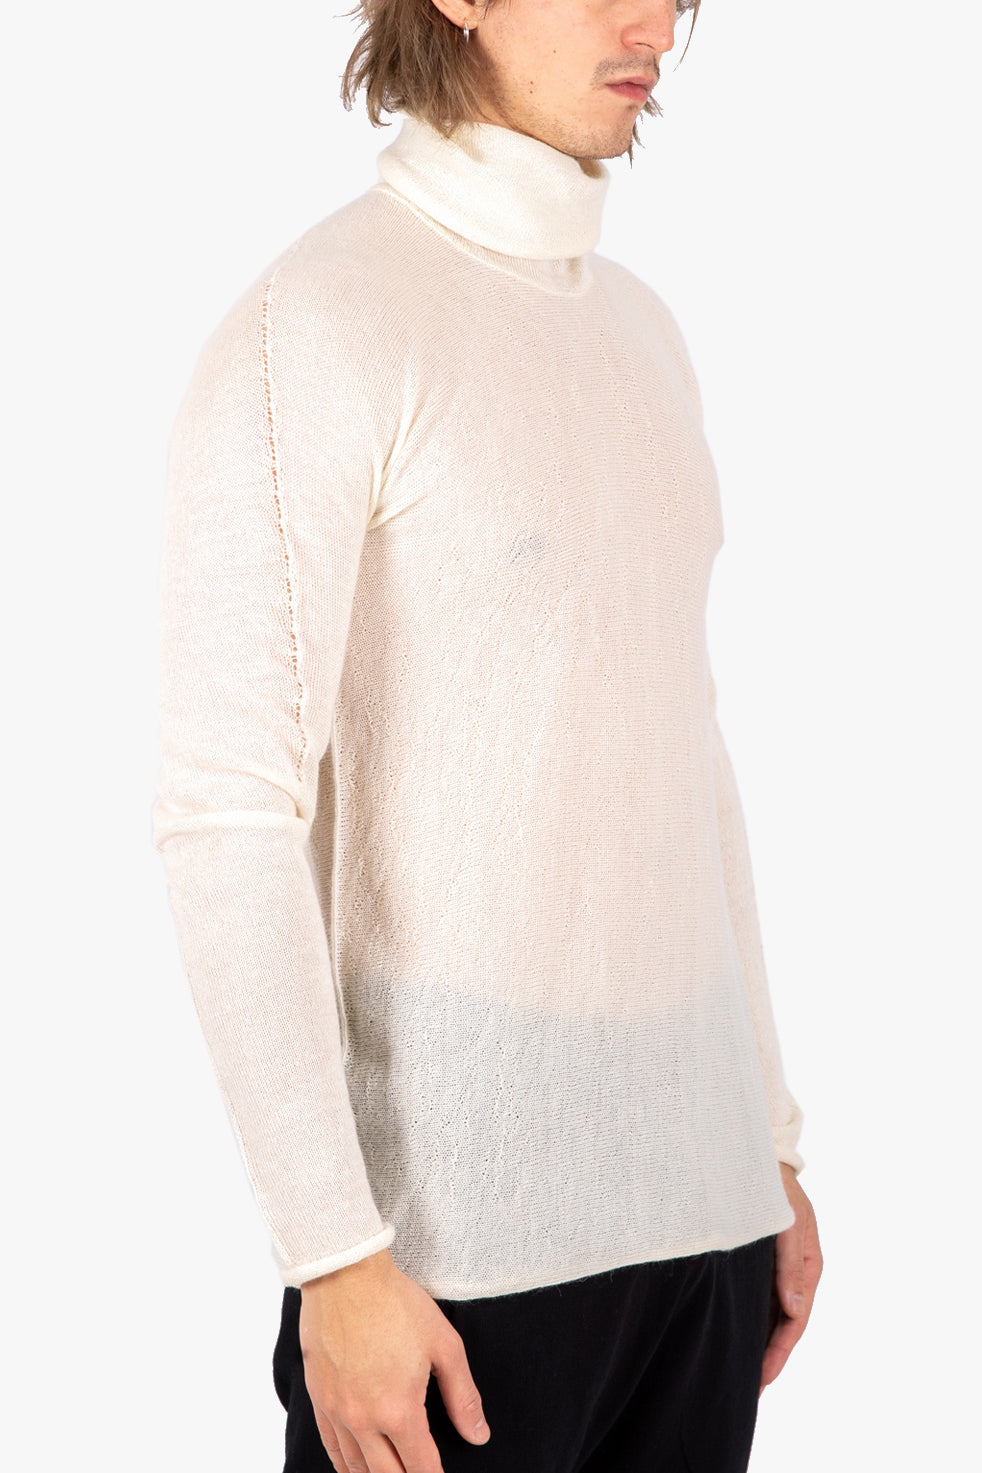 Turtleneck arched wrinkled sweater